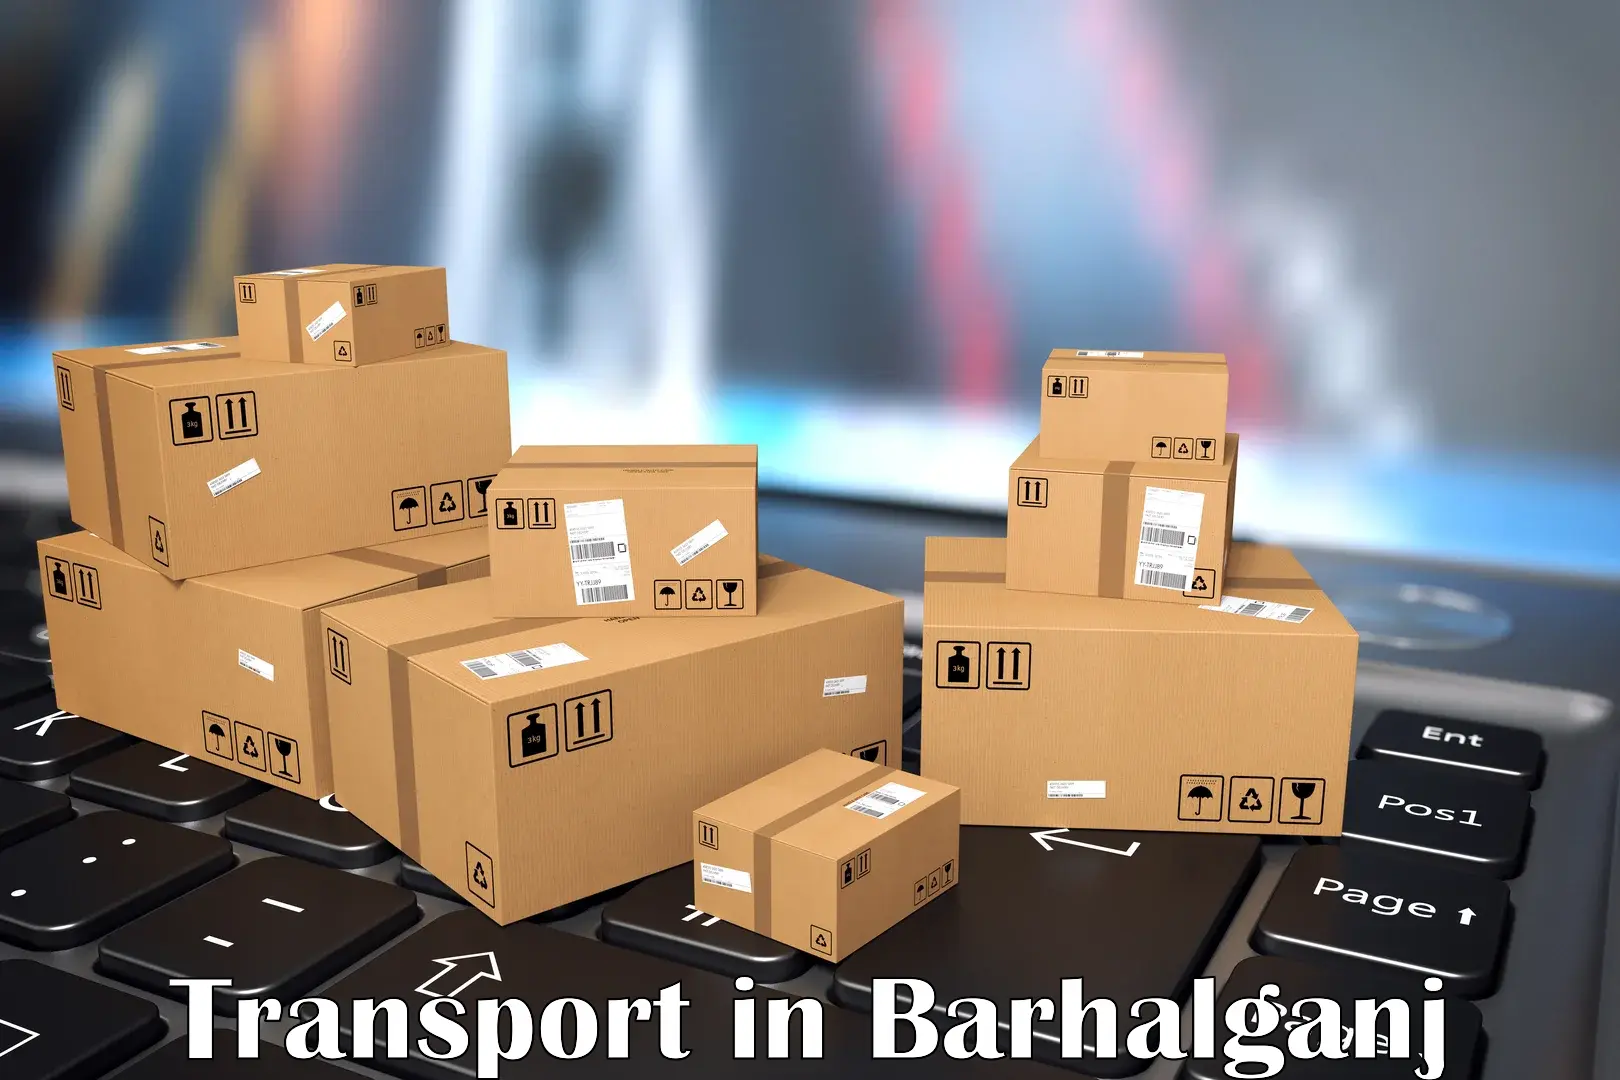 Interstate goods transport in Barhalganj